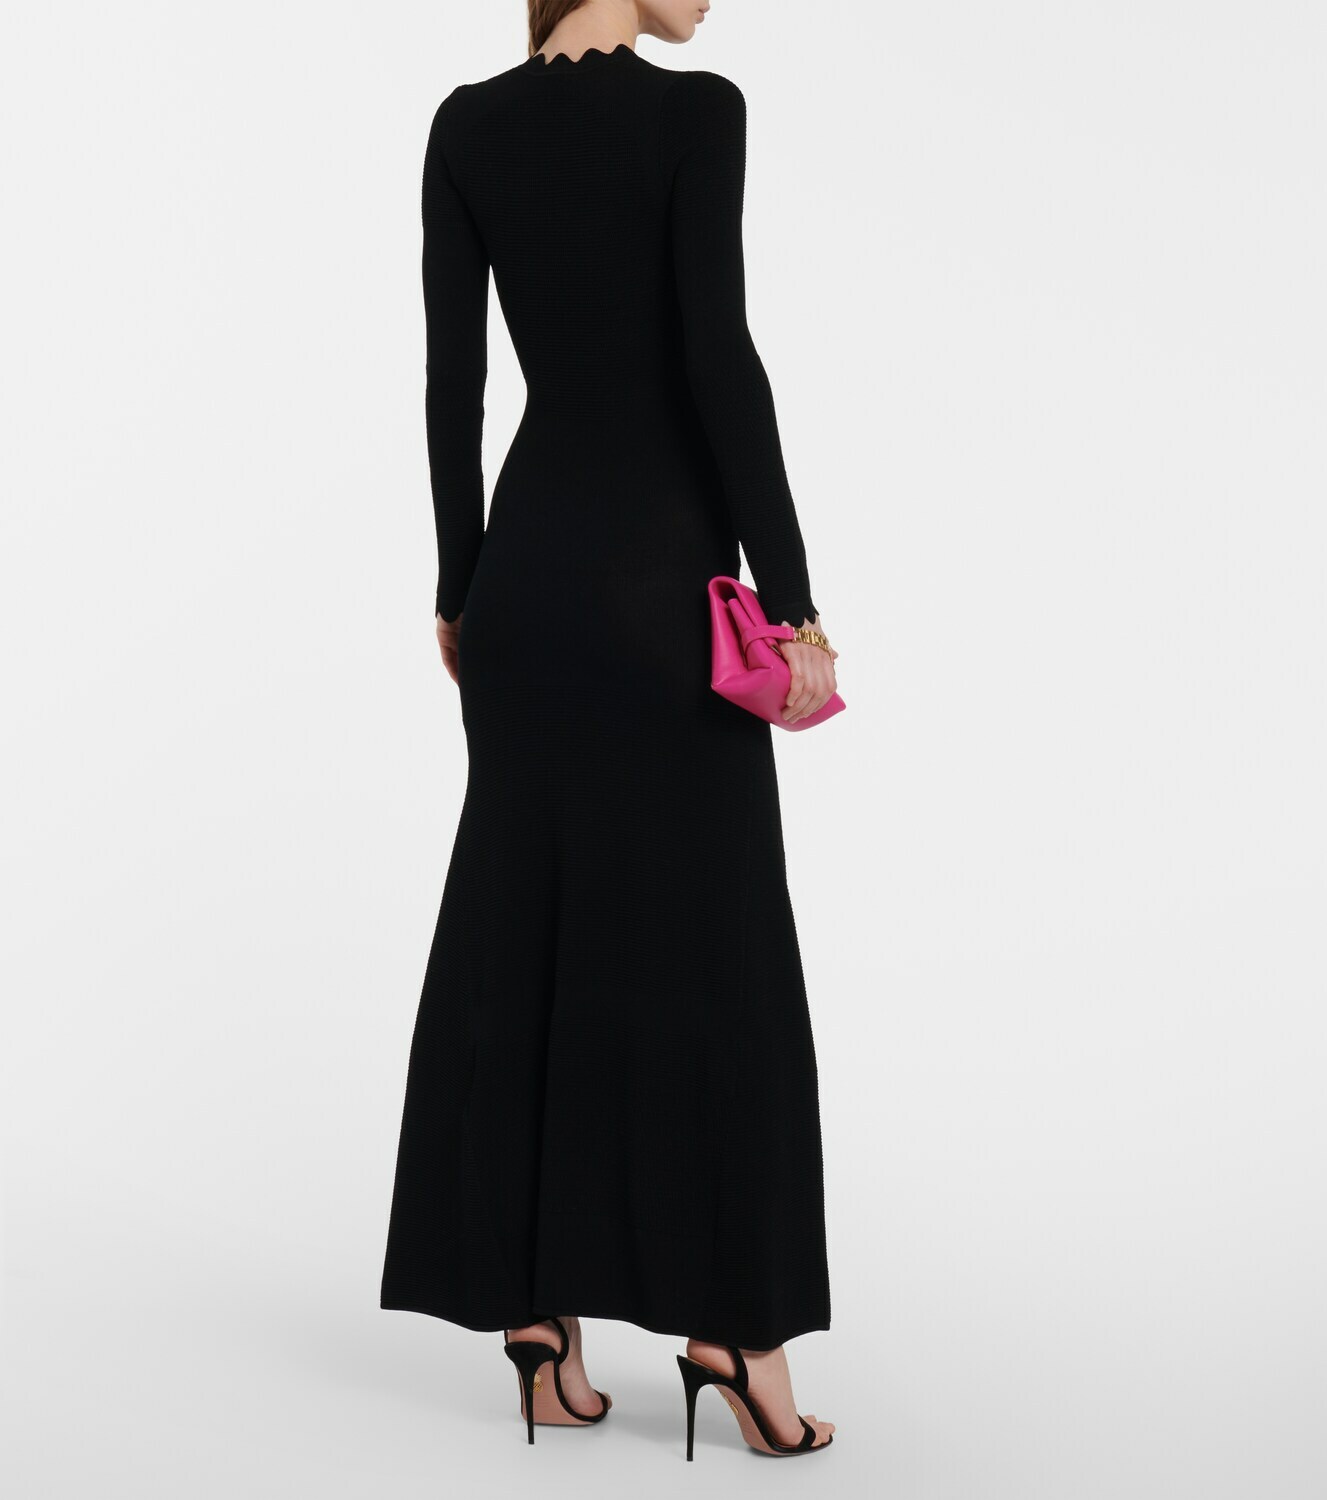 Victoria Beckham - Scalloped semi-sheer knit maxi dress Victoria Beckham